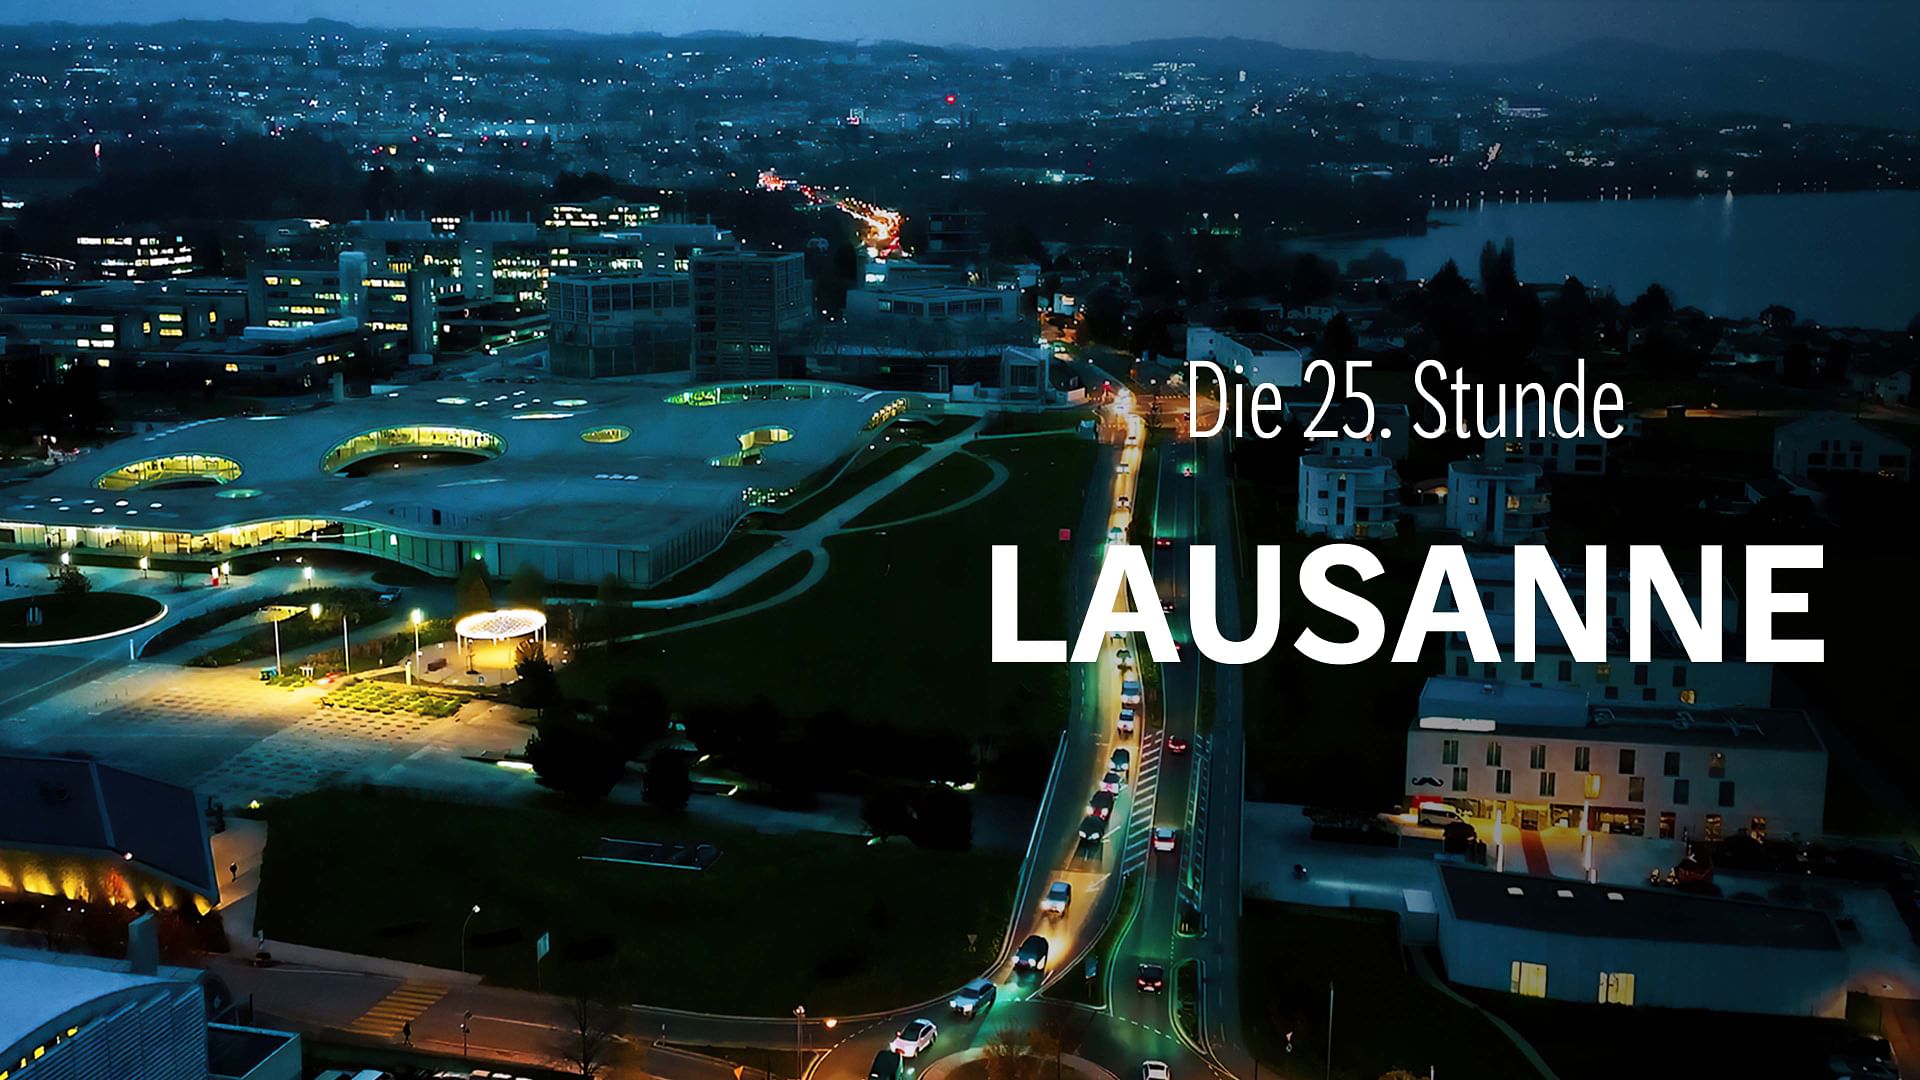 Die 25. Stunde – Lausanne